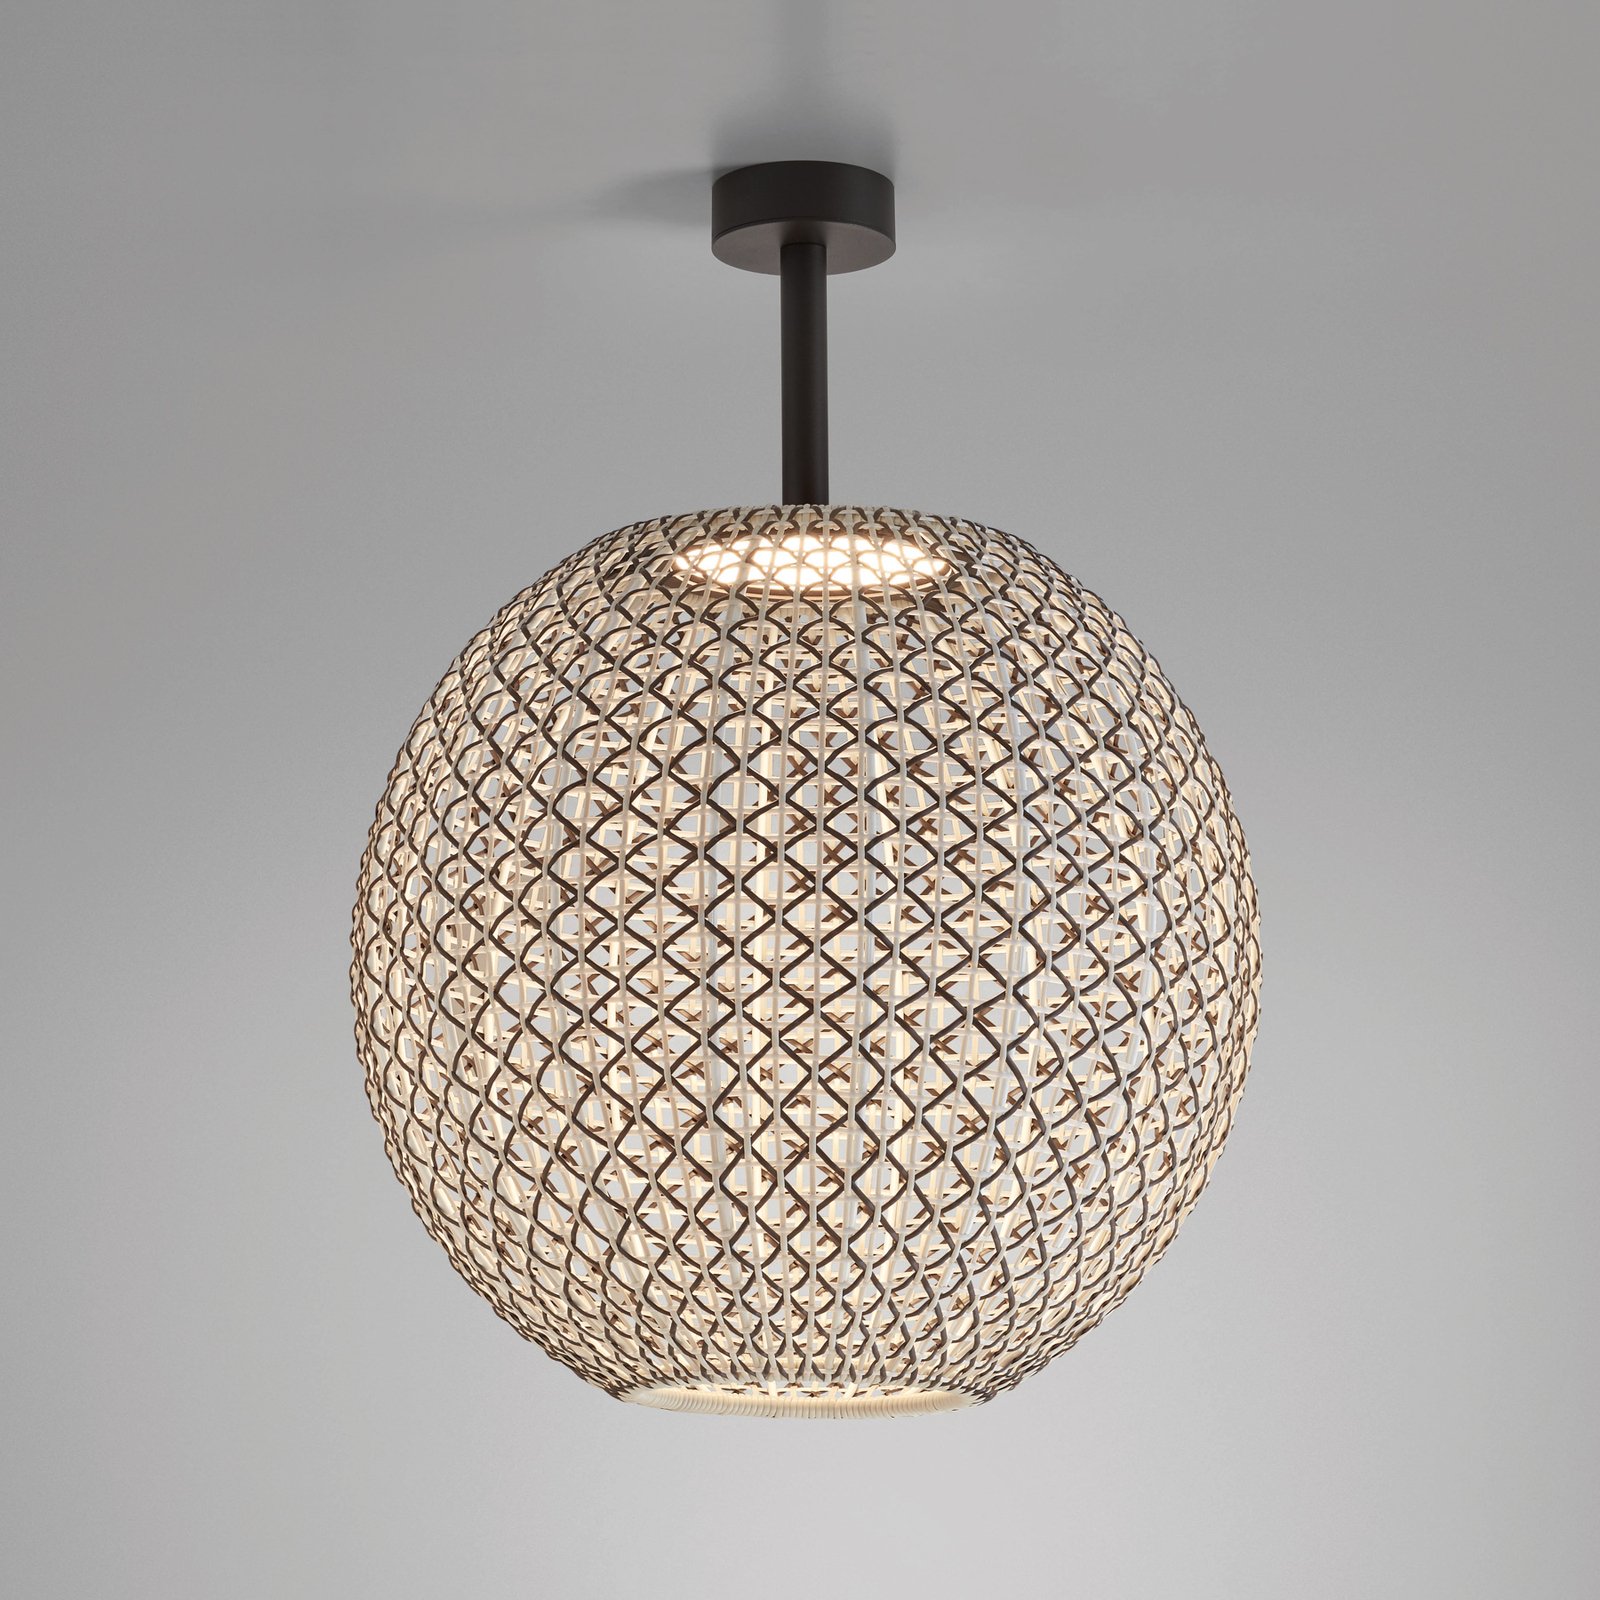 Lampa sufitowa zewnętrzna Bover Nans Sphere PF/80 LED brązowa